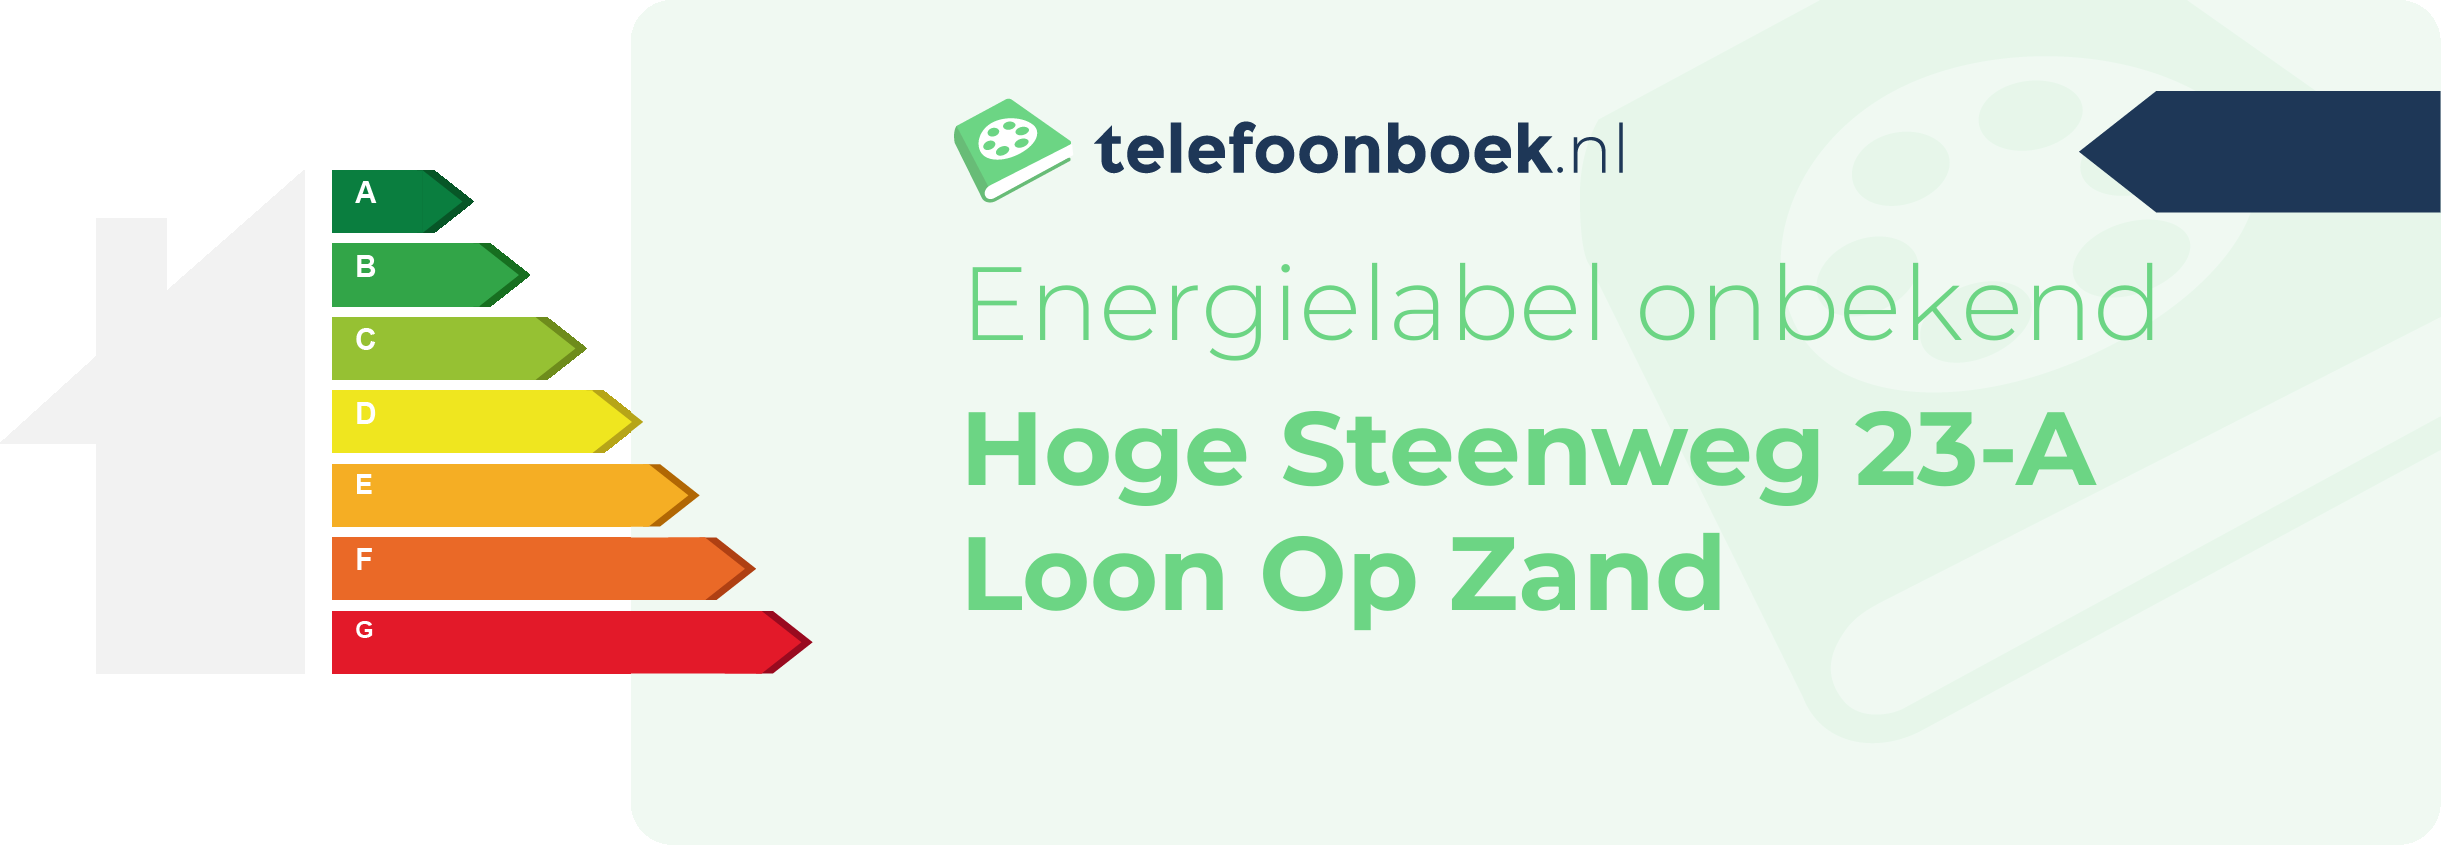 Energielabel Hoge Steenweg 23-A Loon Op Zand